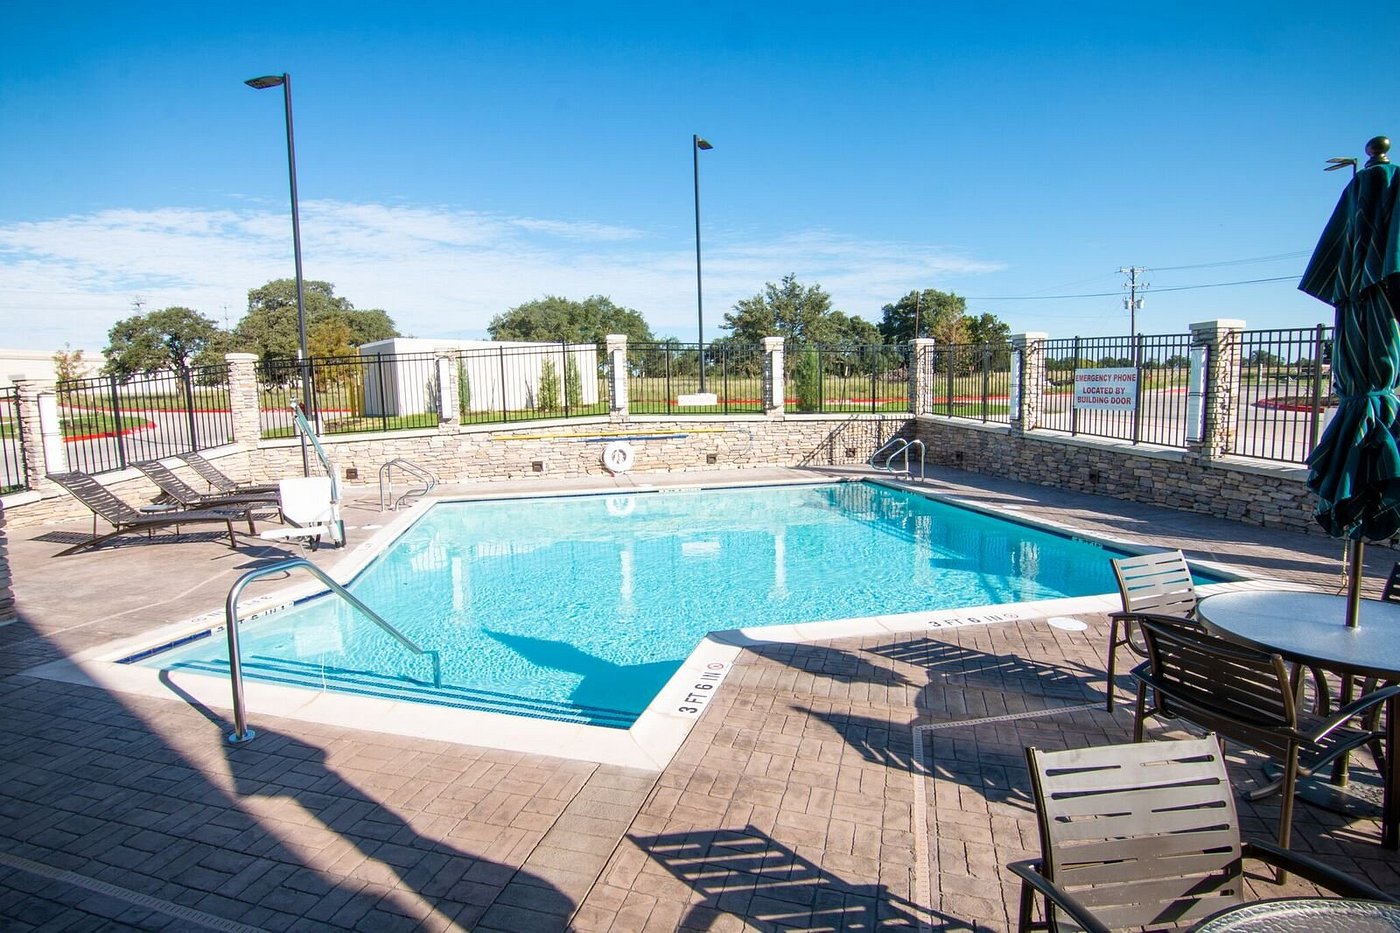 Hyatt Place Austin Cedar Park Pool Pictures & Reviews - Tripadvisor